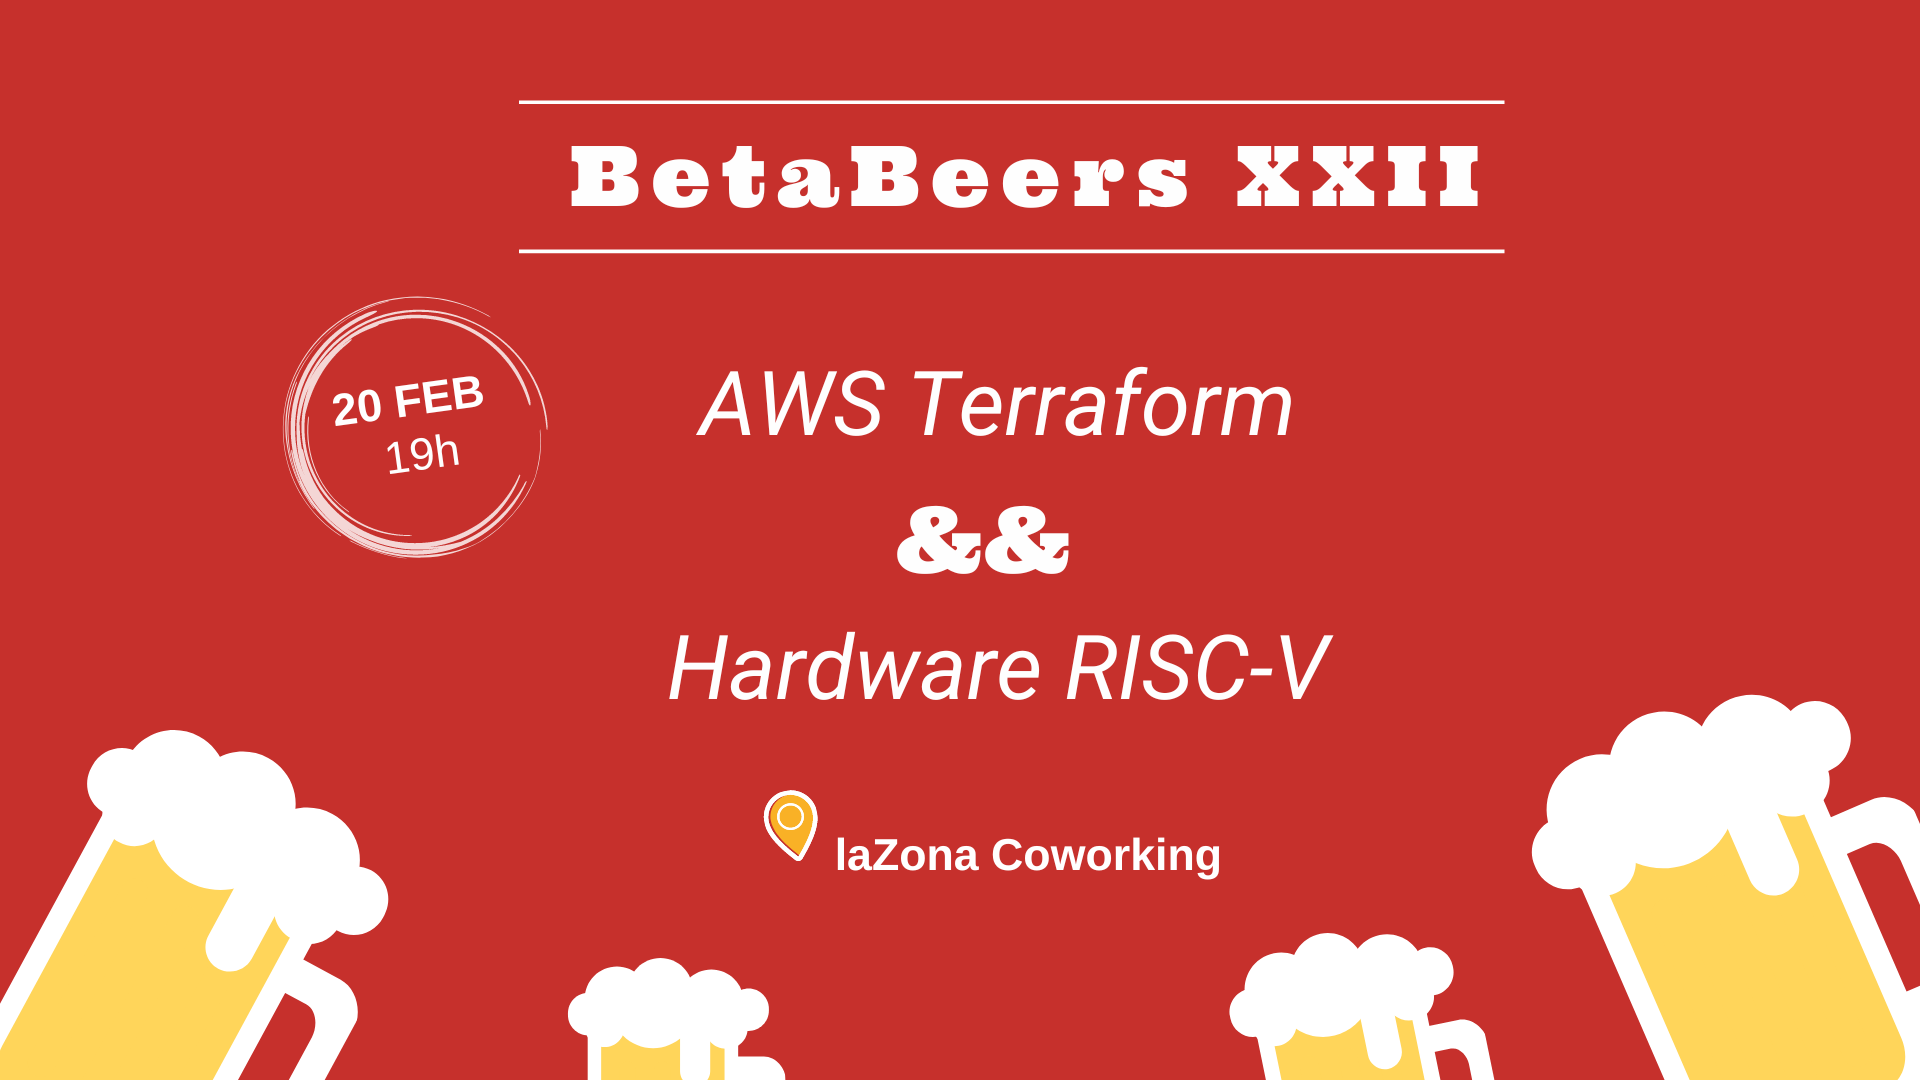 Betabeers XXII: AWS con Terraform y Hardware (RISC-V) CPU's